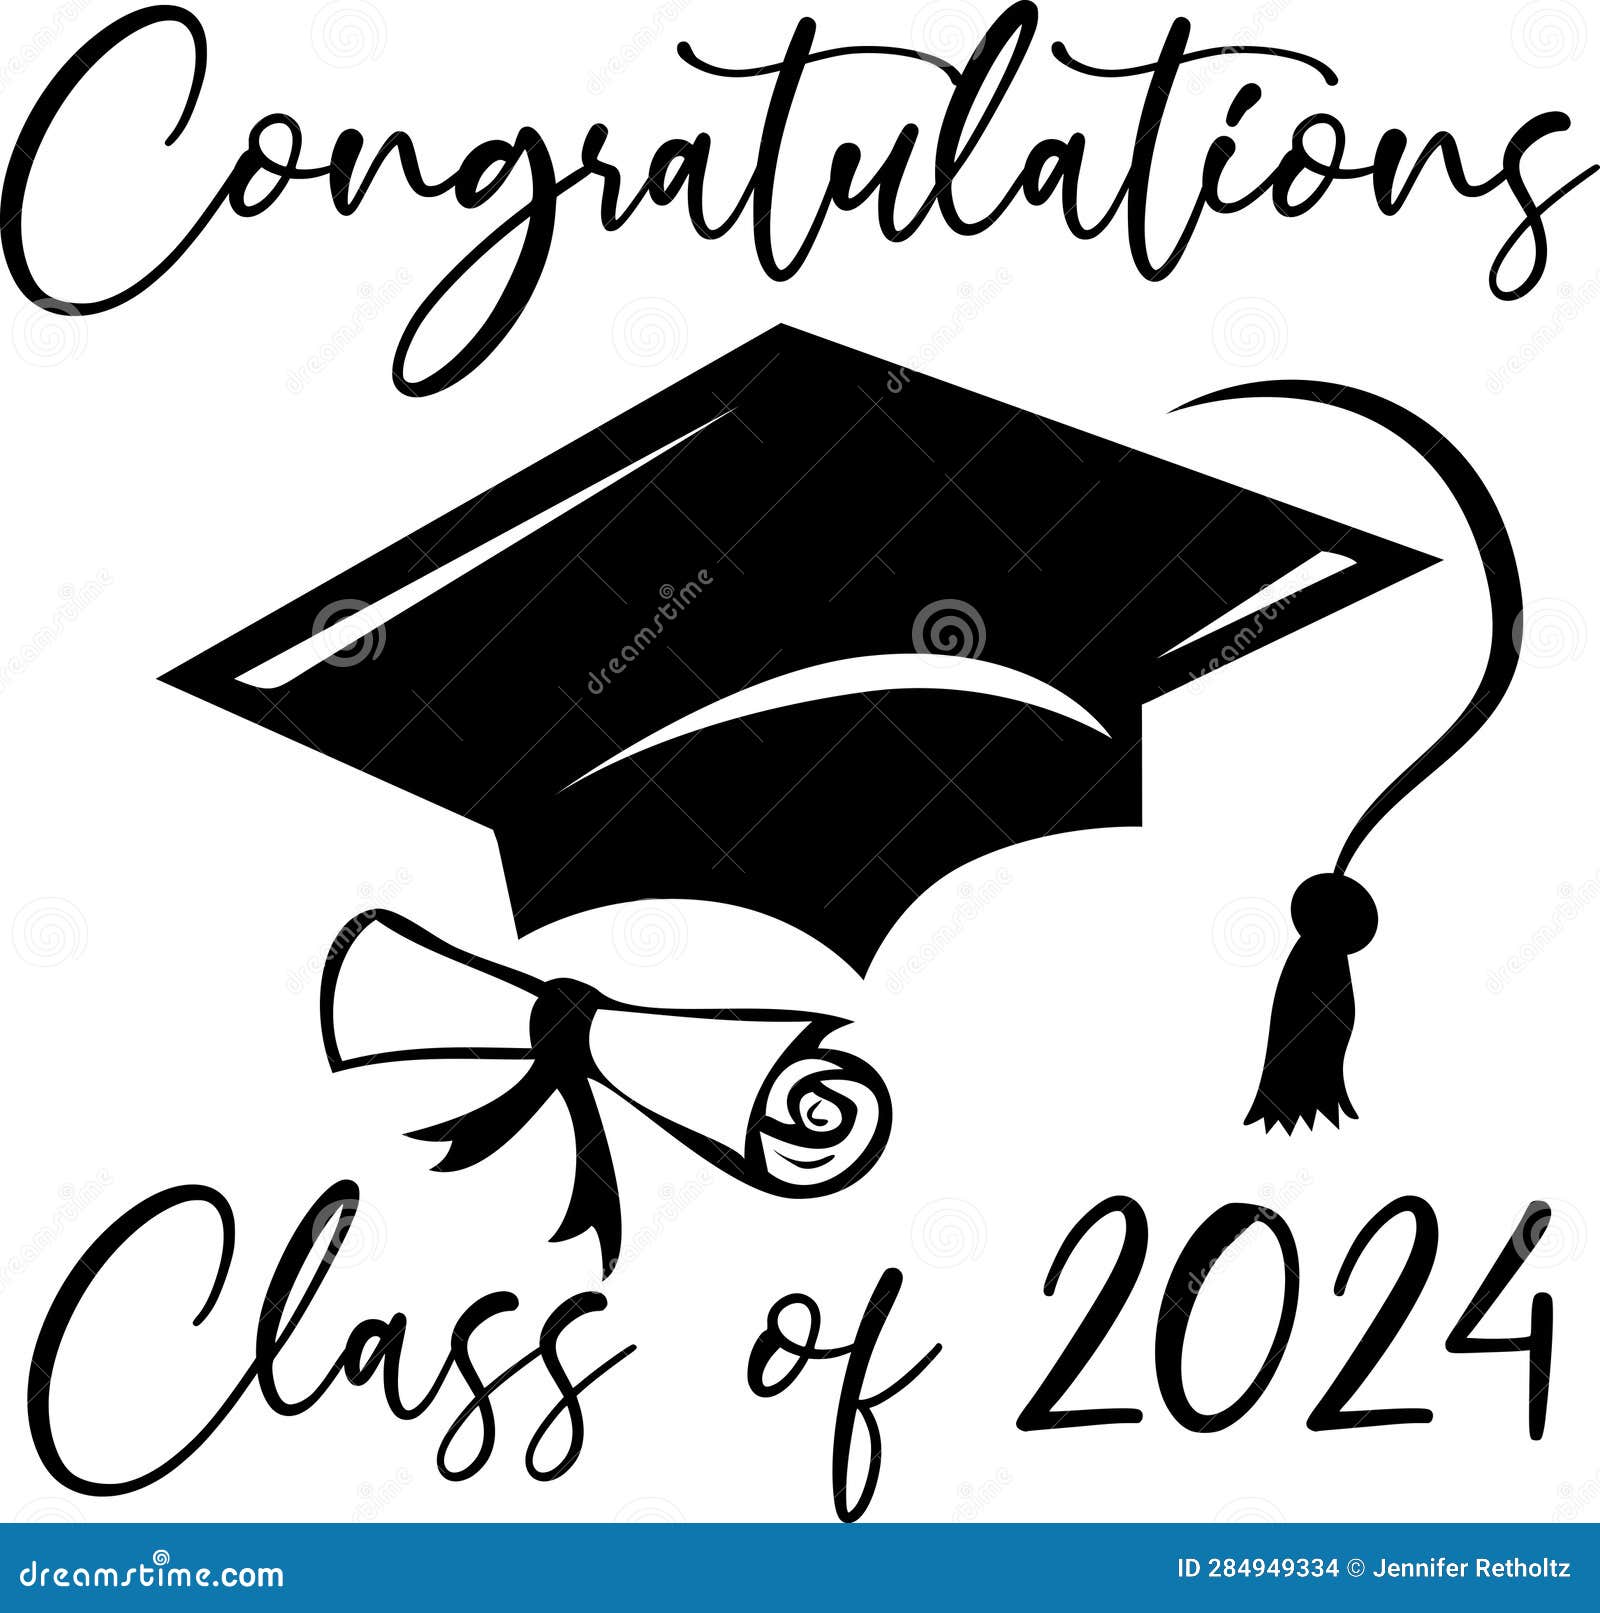 Congratulations Class of 2024 Graduation Cap and Diploma Design Stock